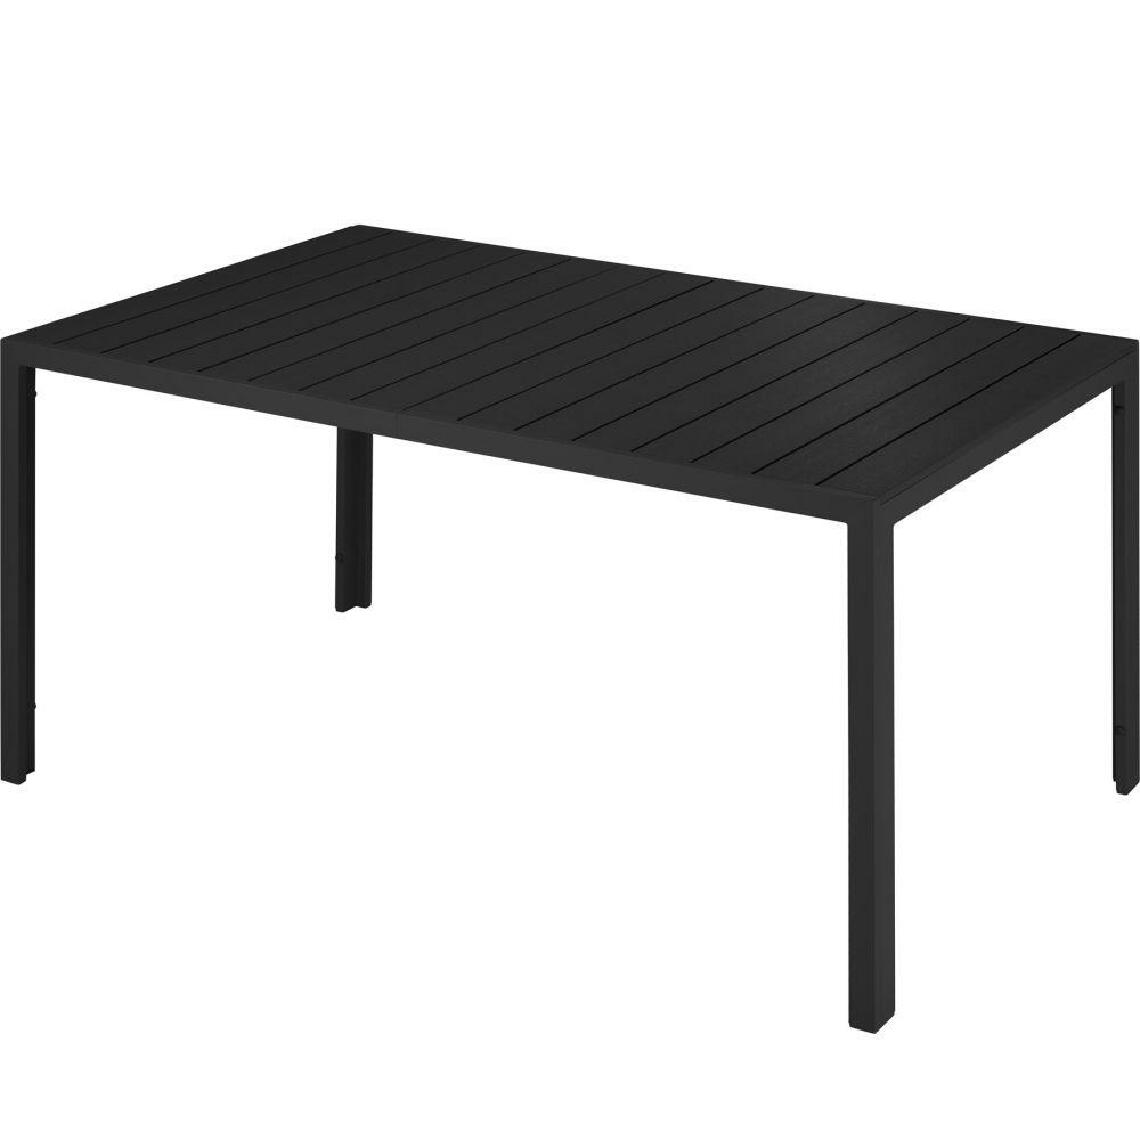 Helloshop26 - Table de jardin moderne aluminium 150 x 90 cm noir 2208263 - Tables de jardin